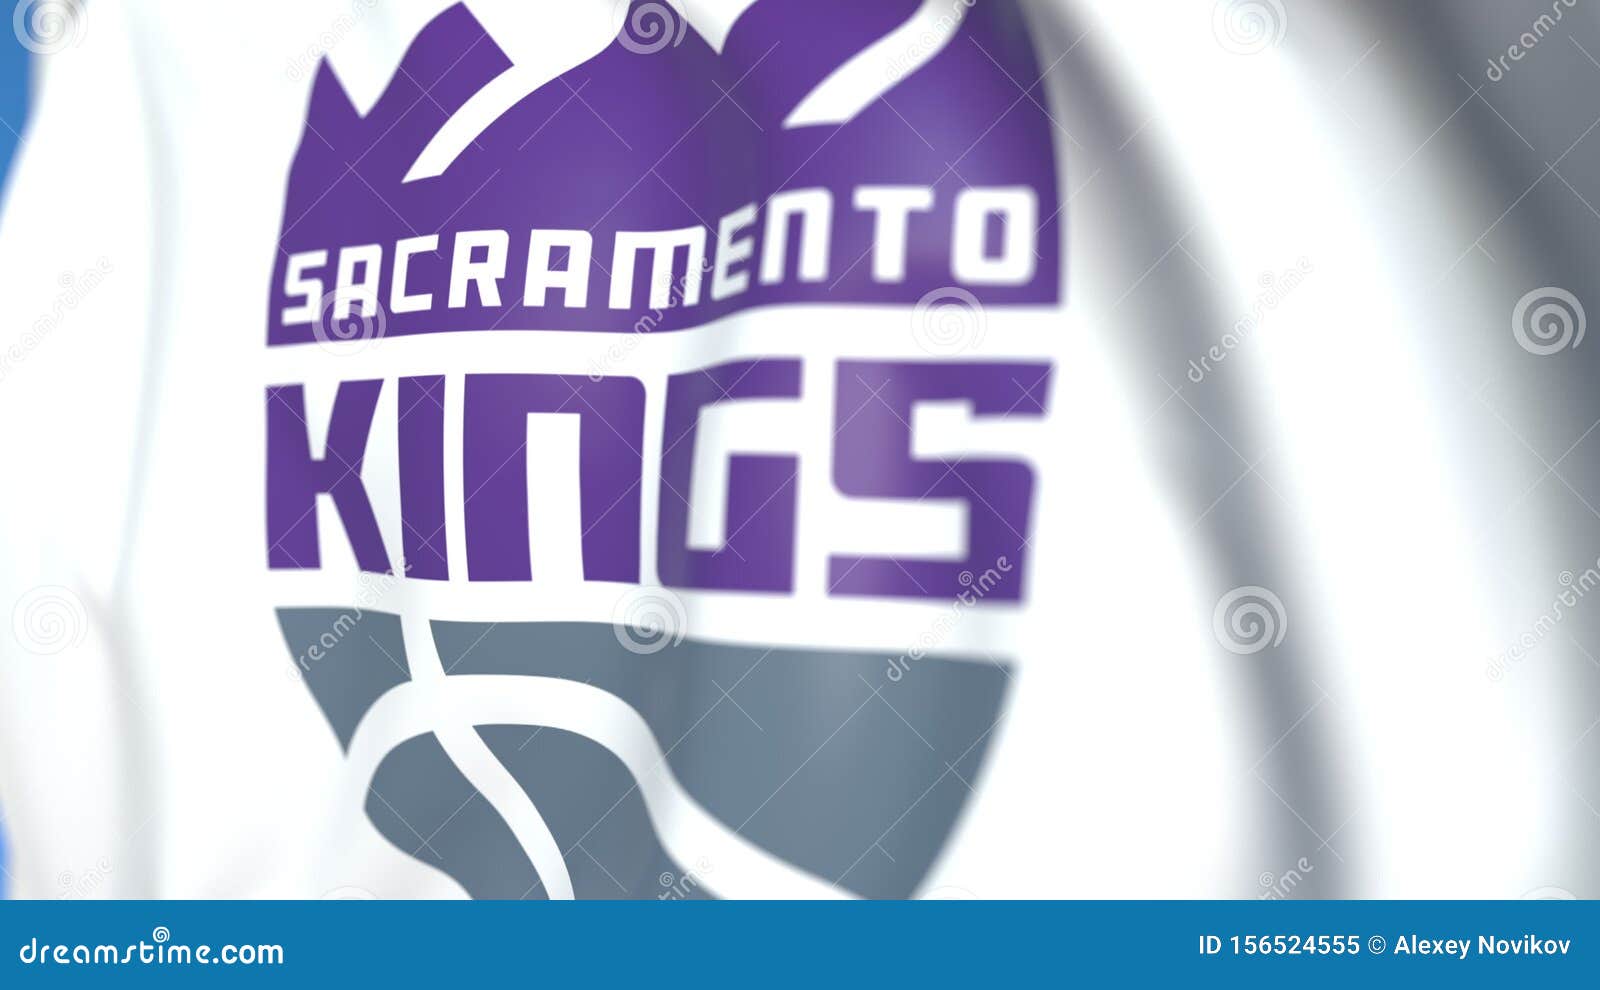 Sacramento Kings All Jerseys and Logos